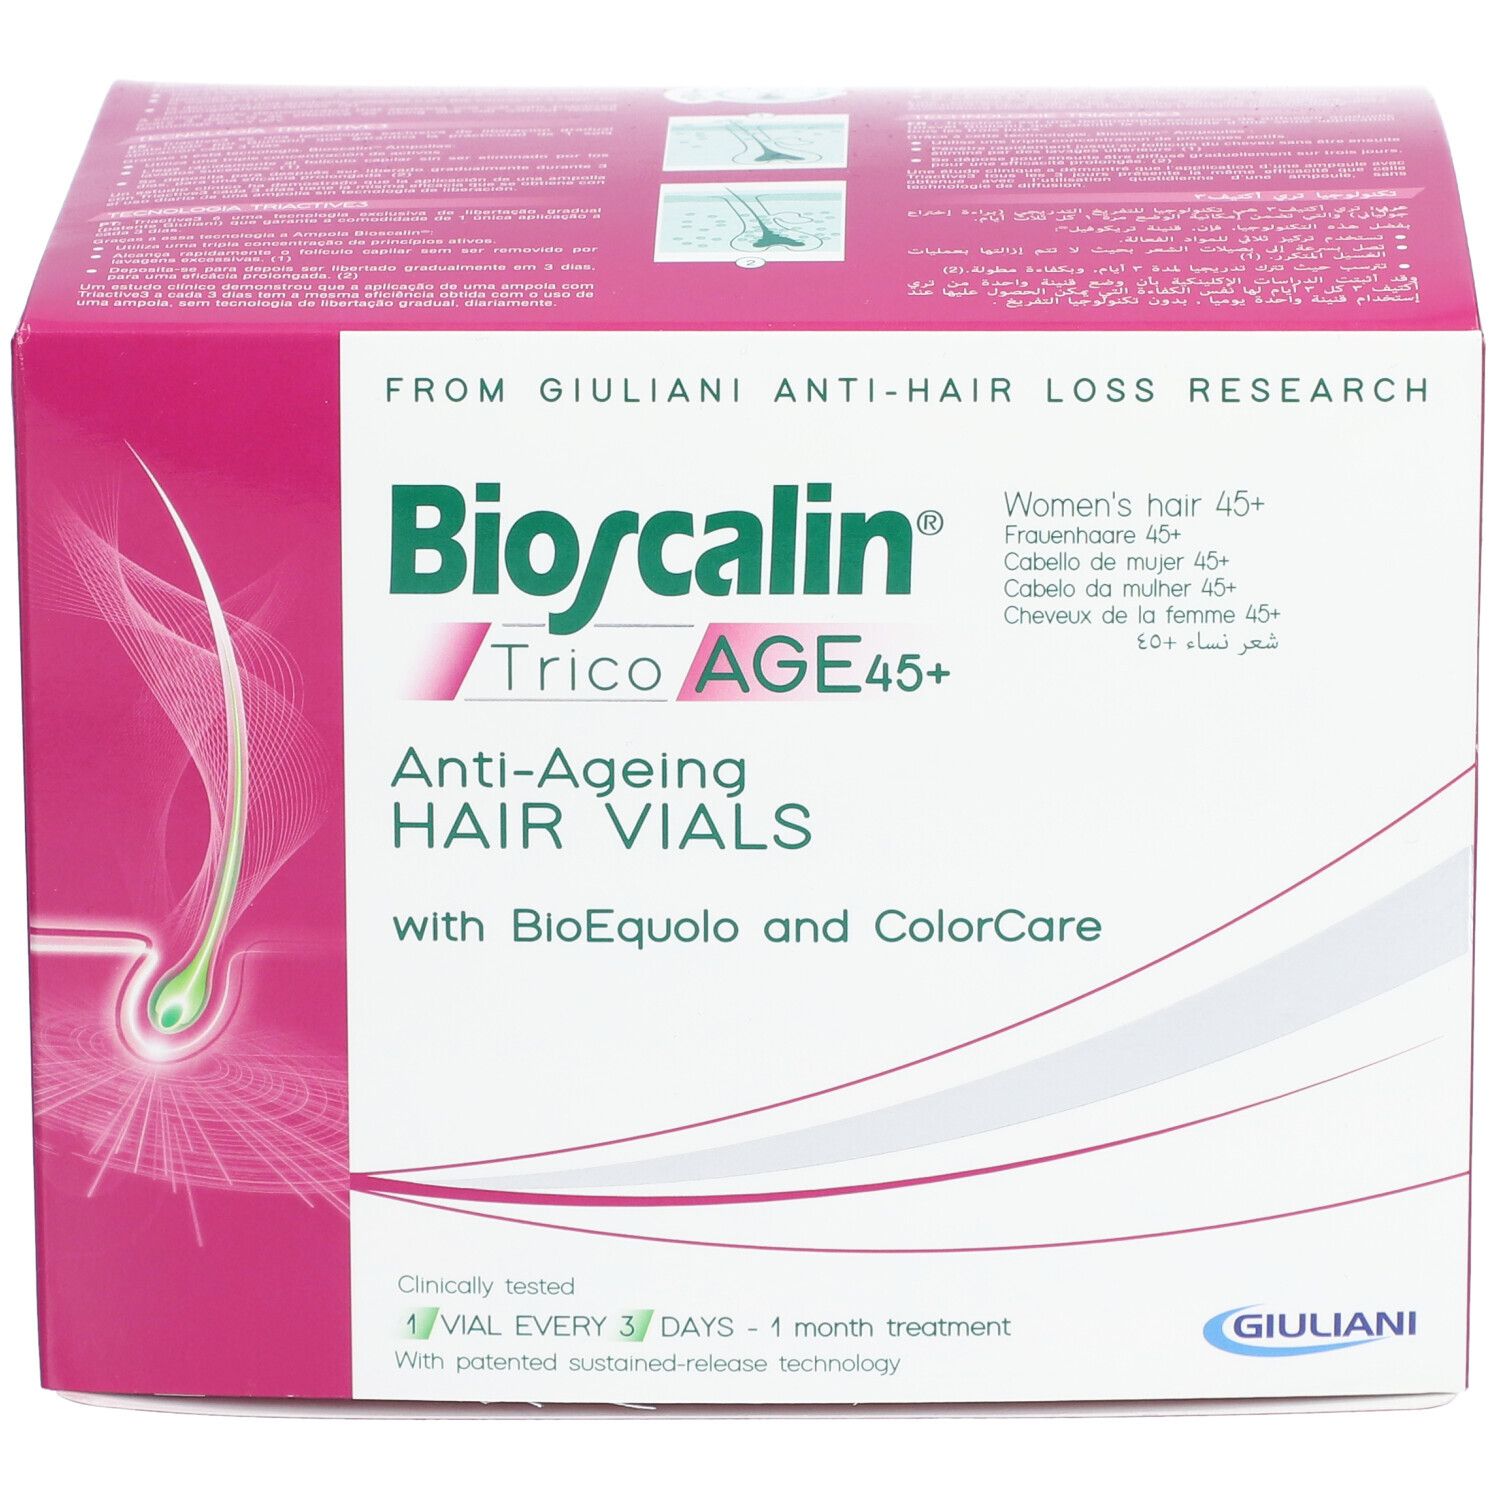 Bioscalin® TricoAGE45+